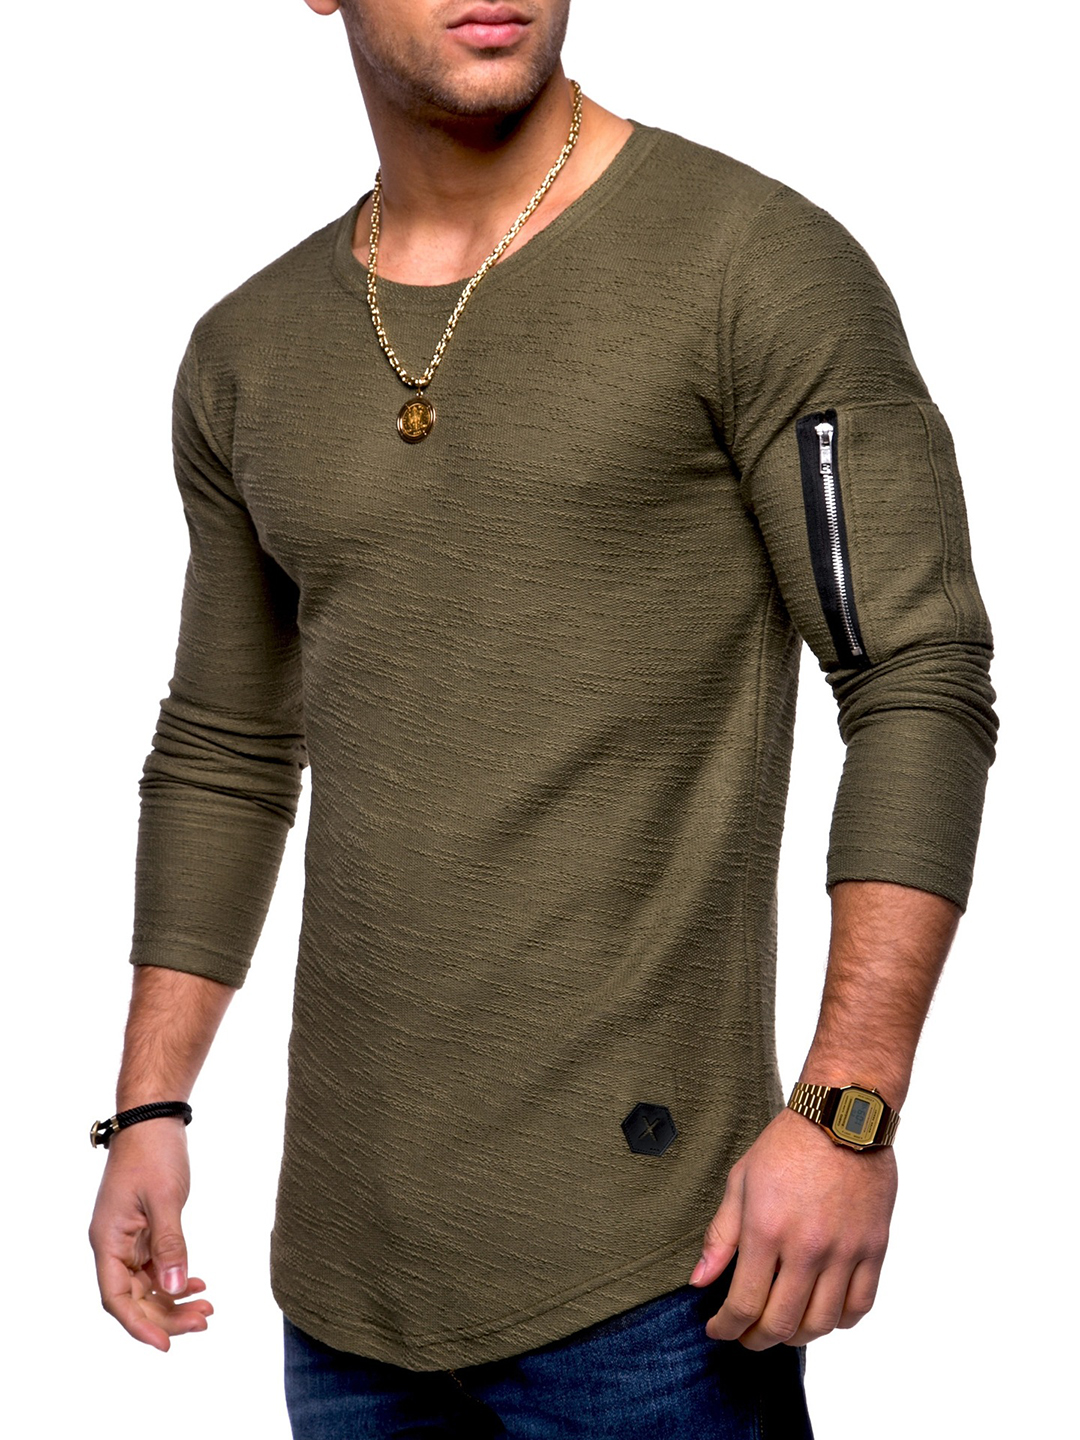 Men's Sleeve Pocket Stitched Sport T-Shirt